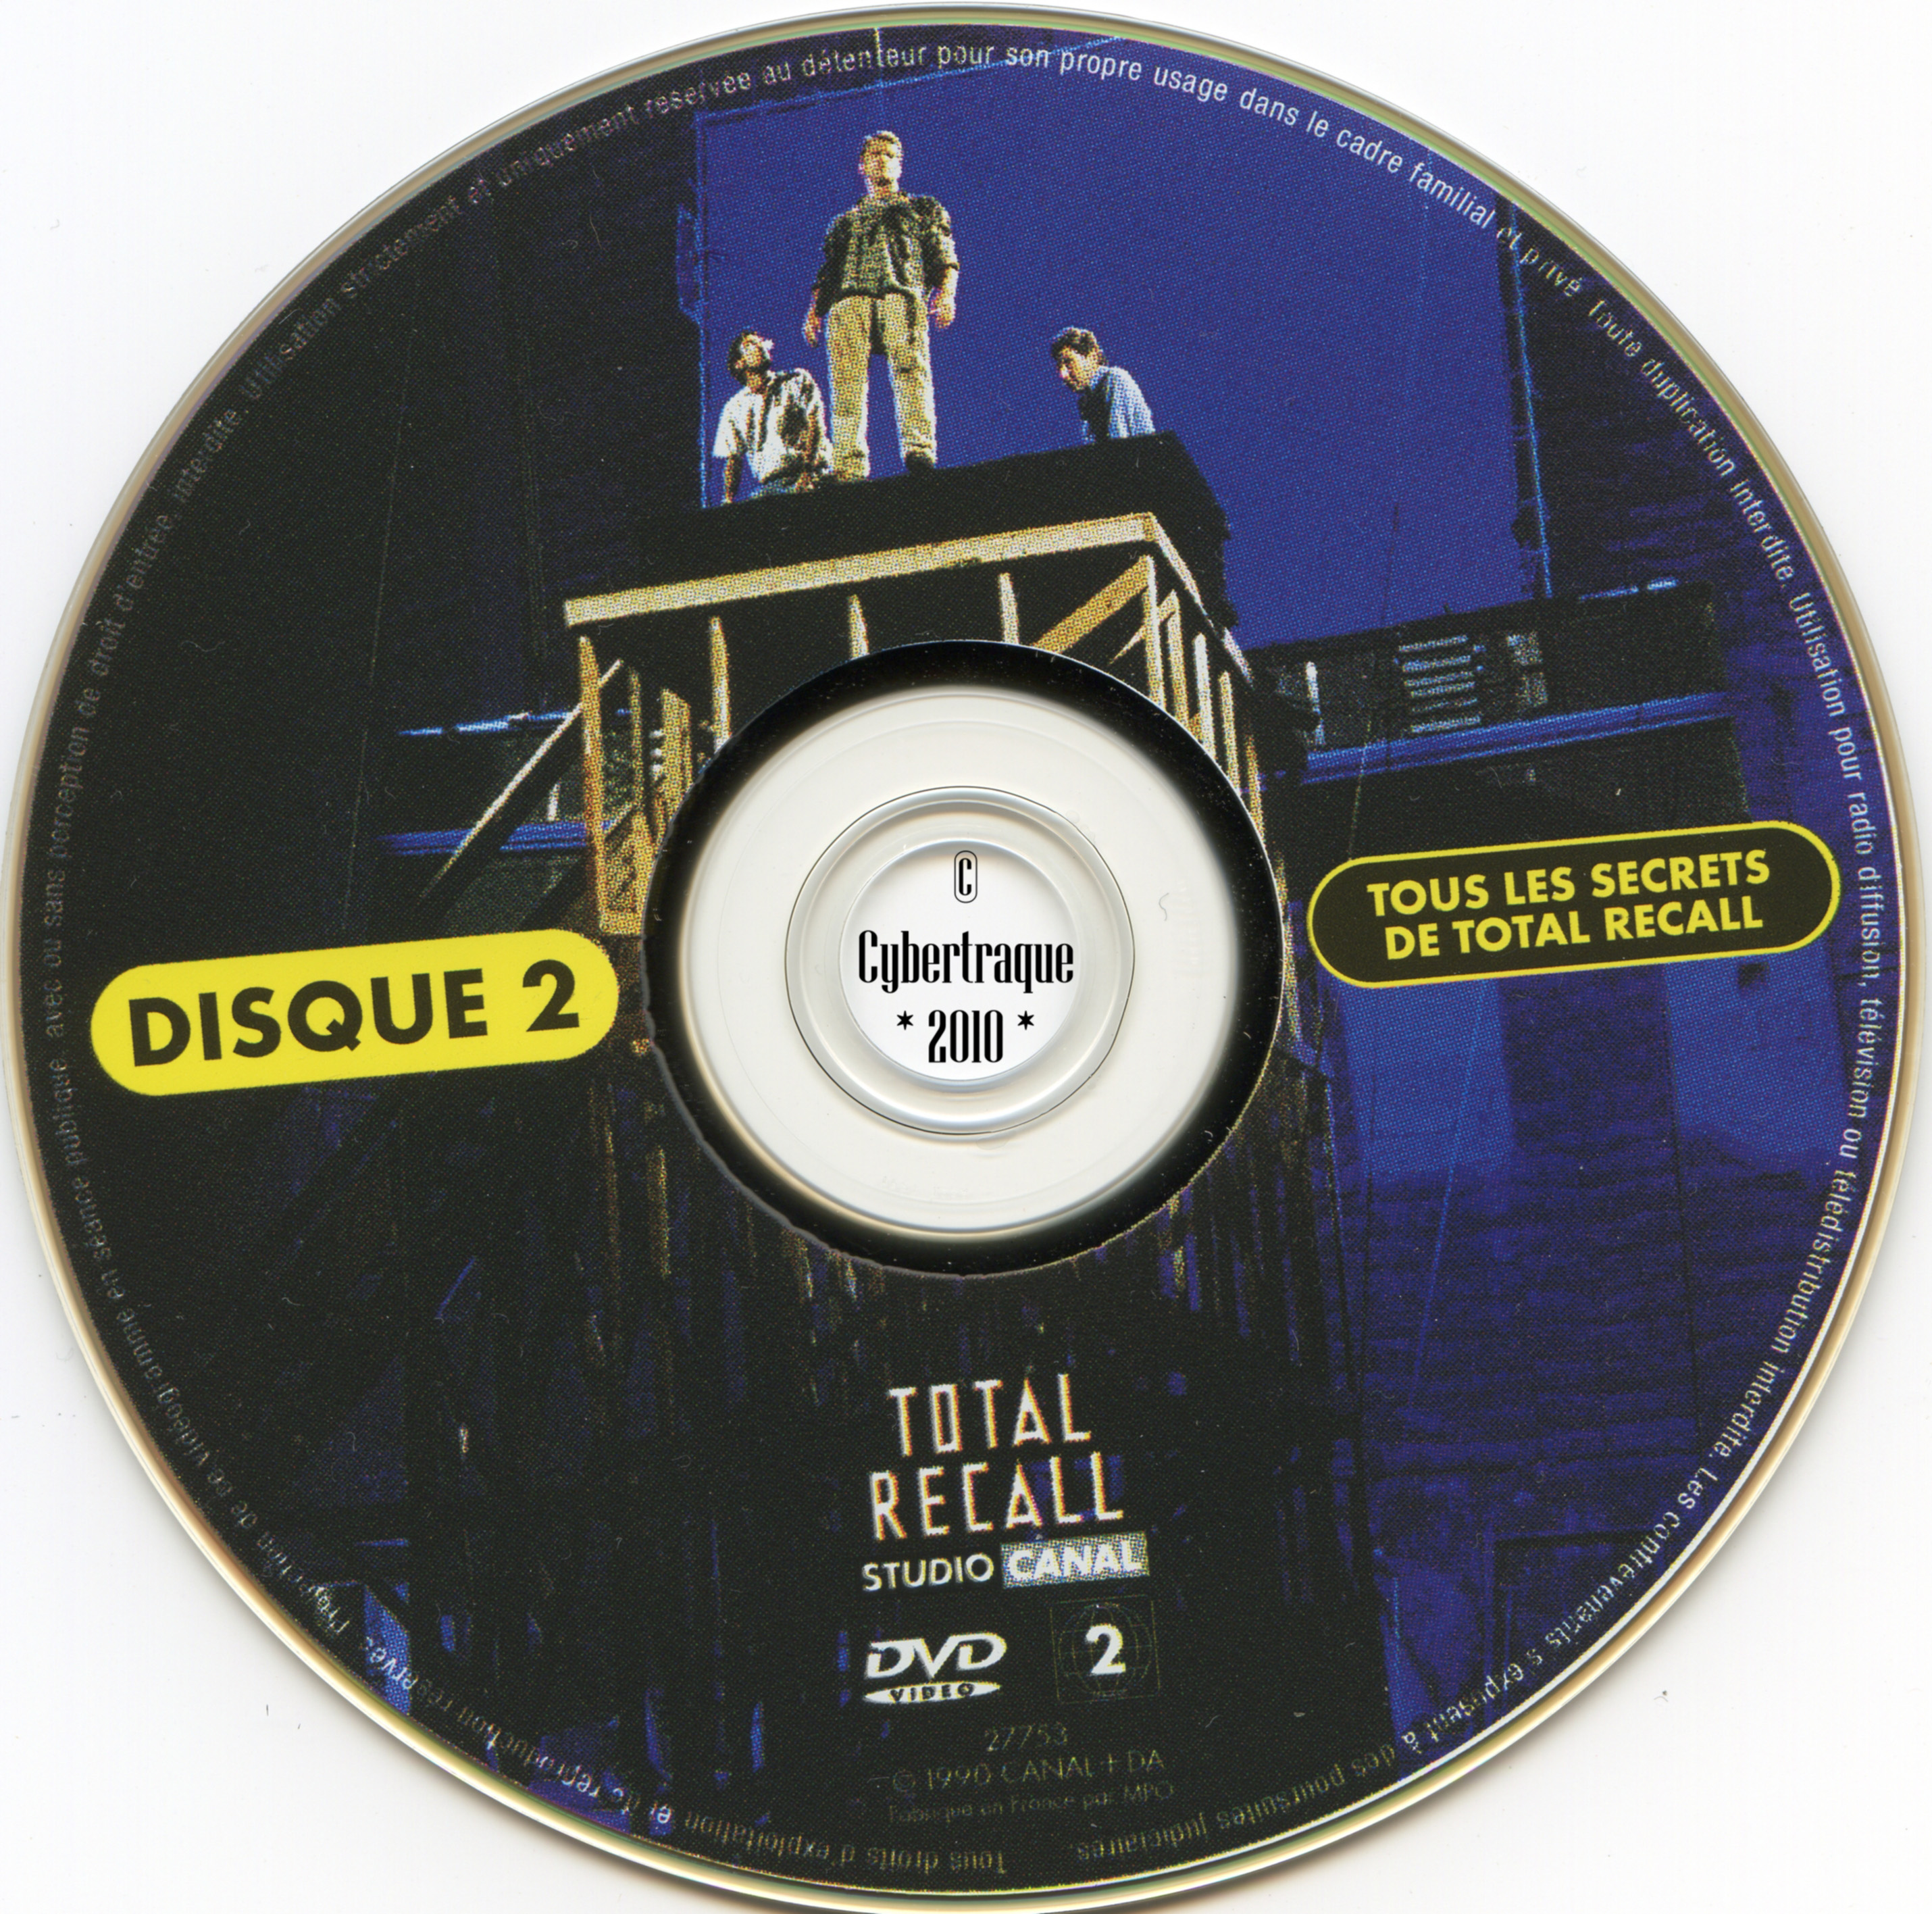 Total recall DISC 2